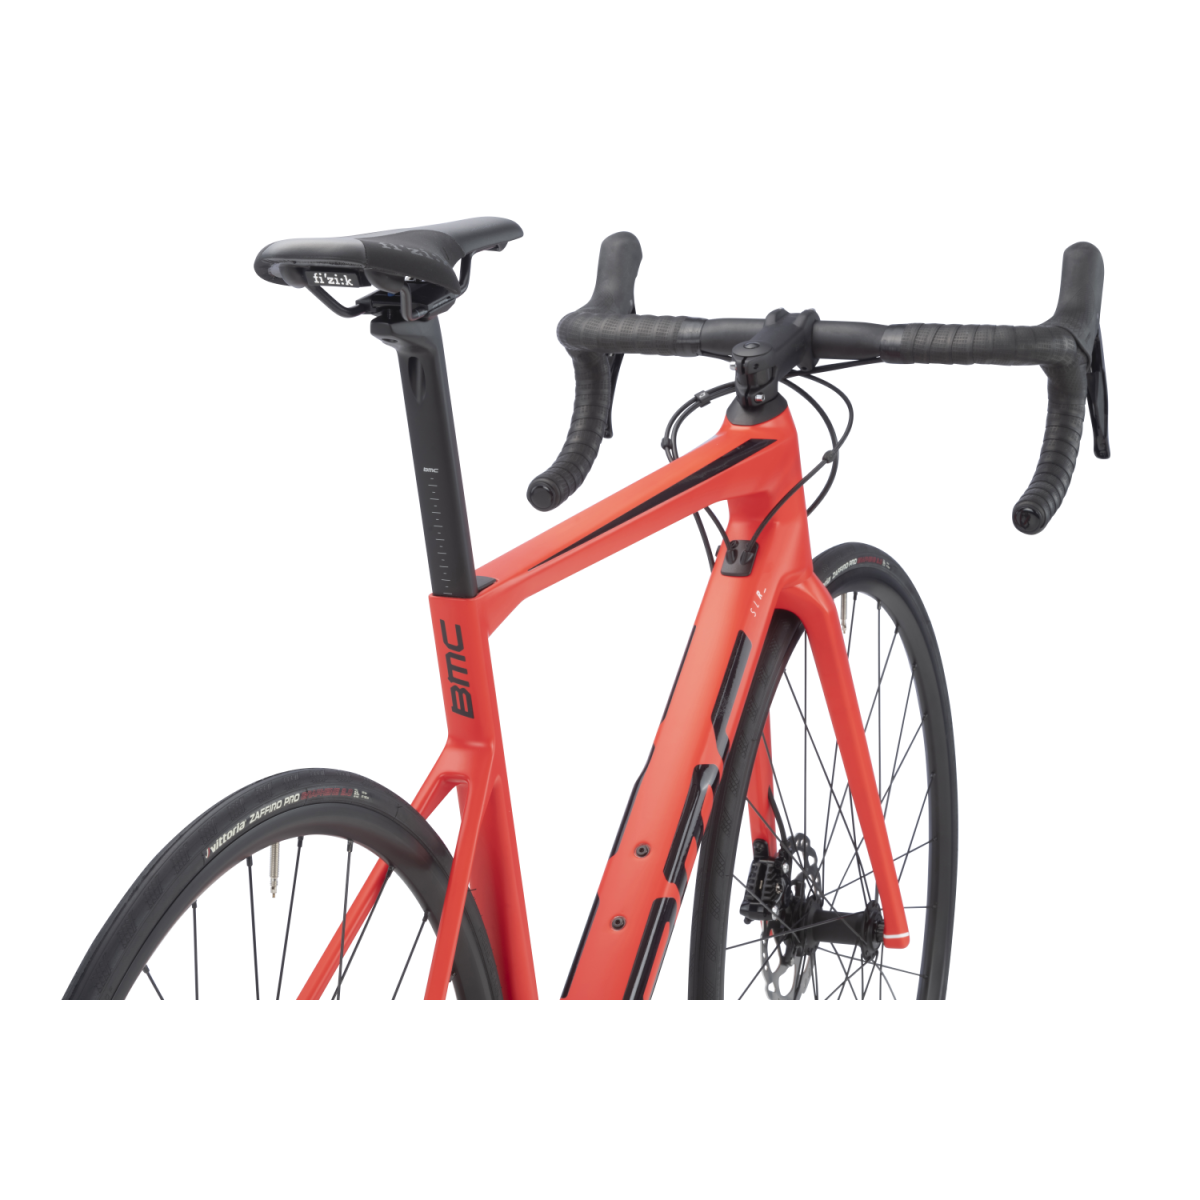 BMC Teammachine SLR Six plento dviratis / Neon Red - Black